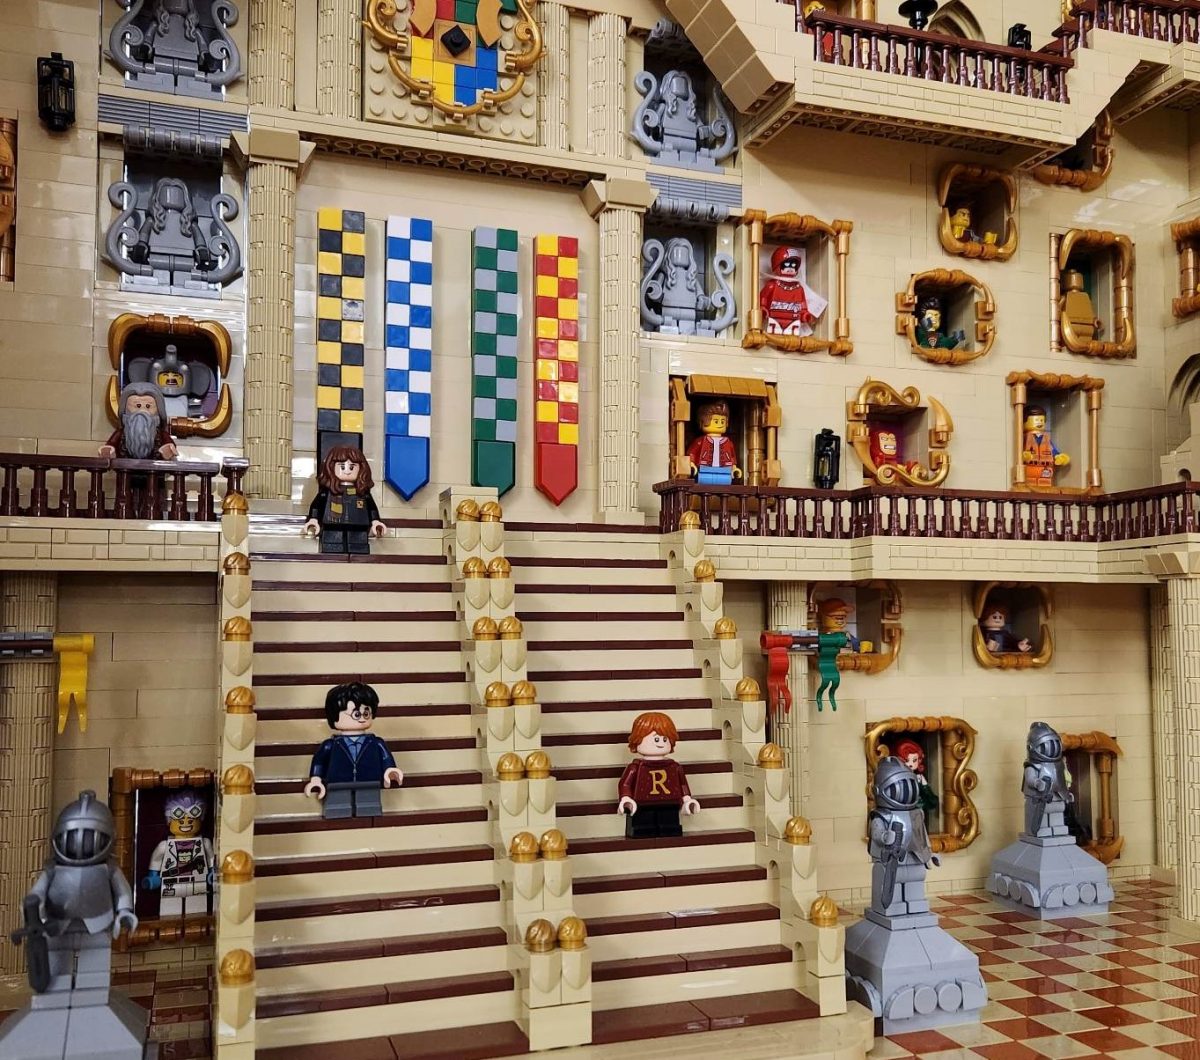 A Harry Potter-themed Lego build